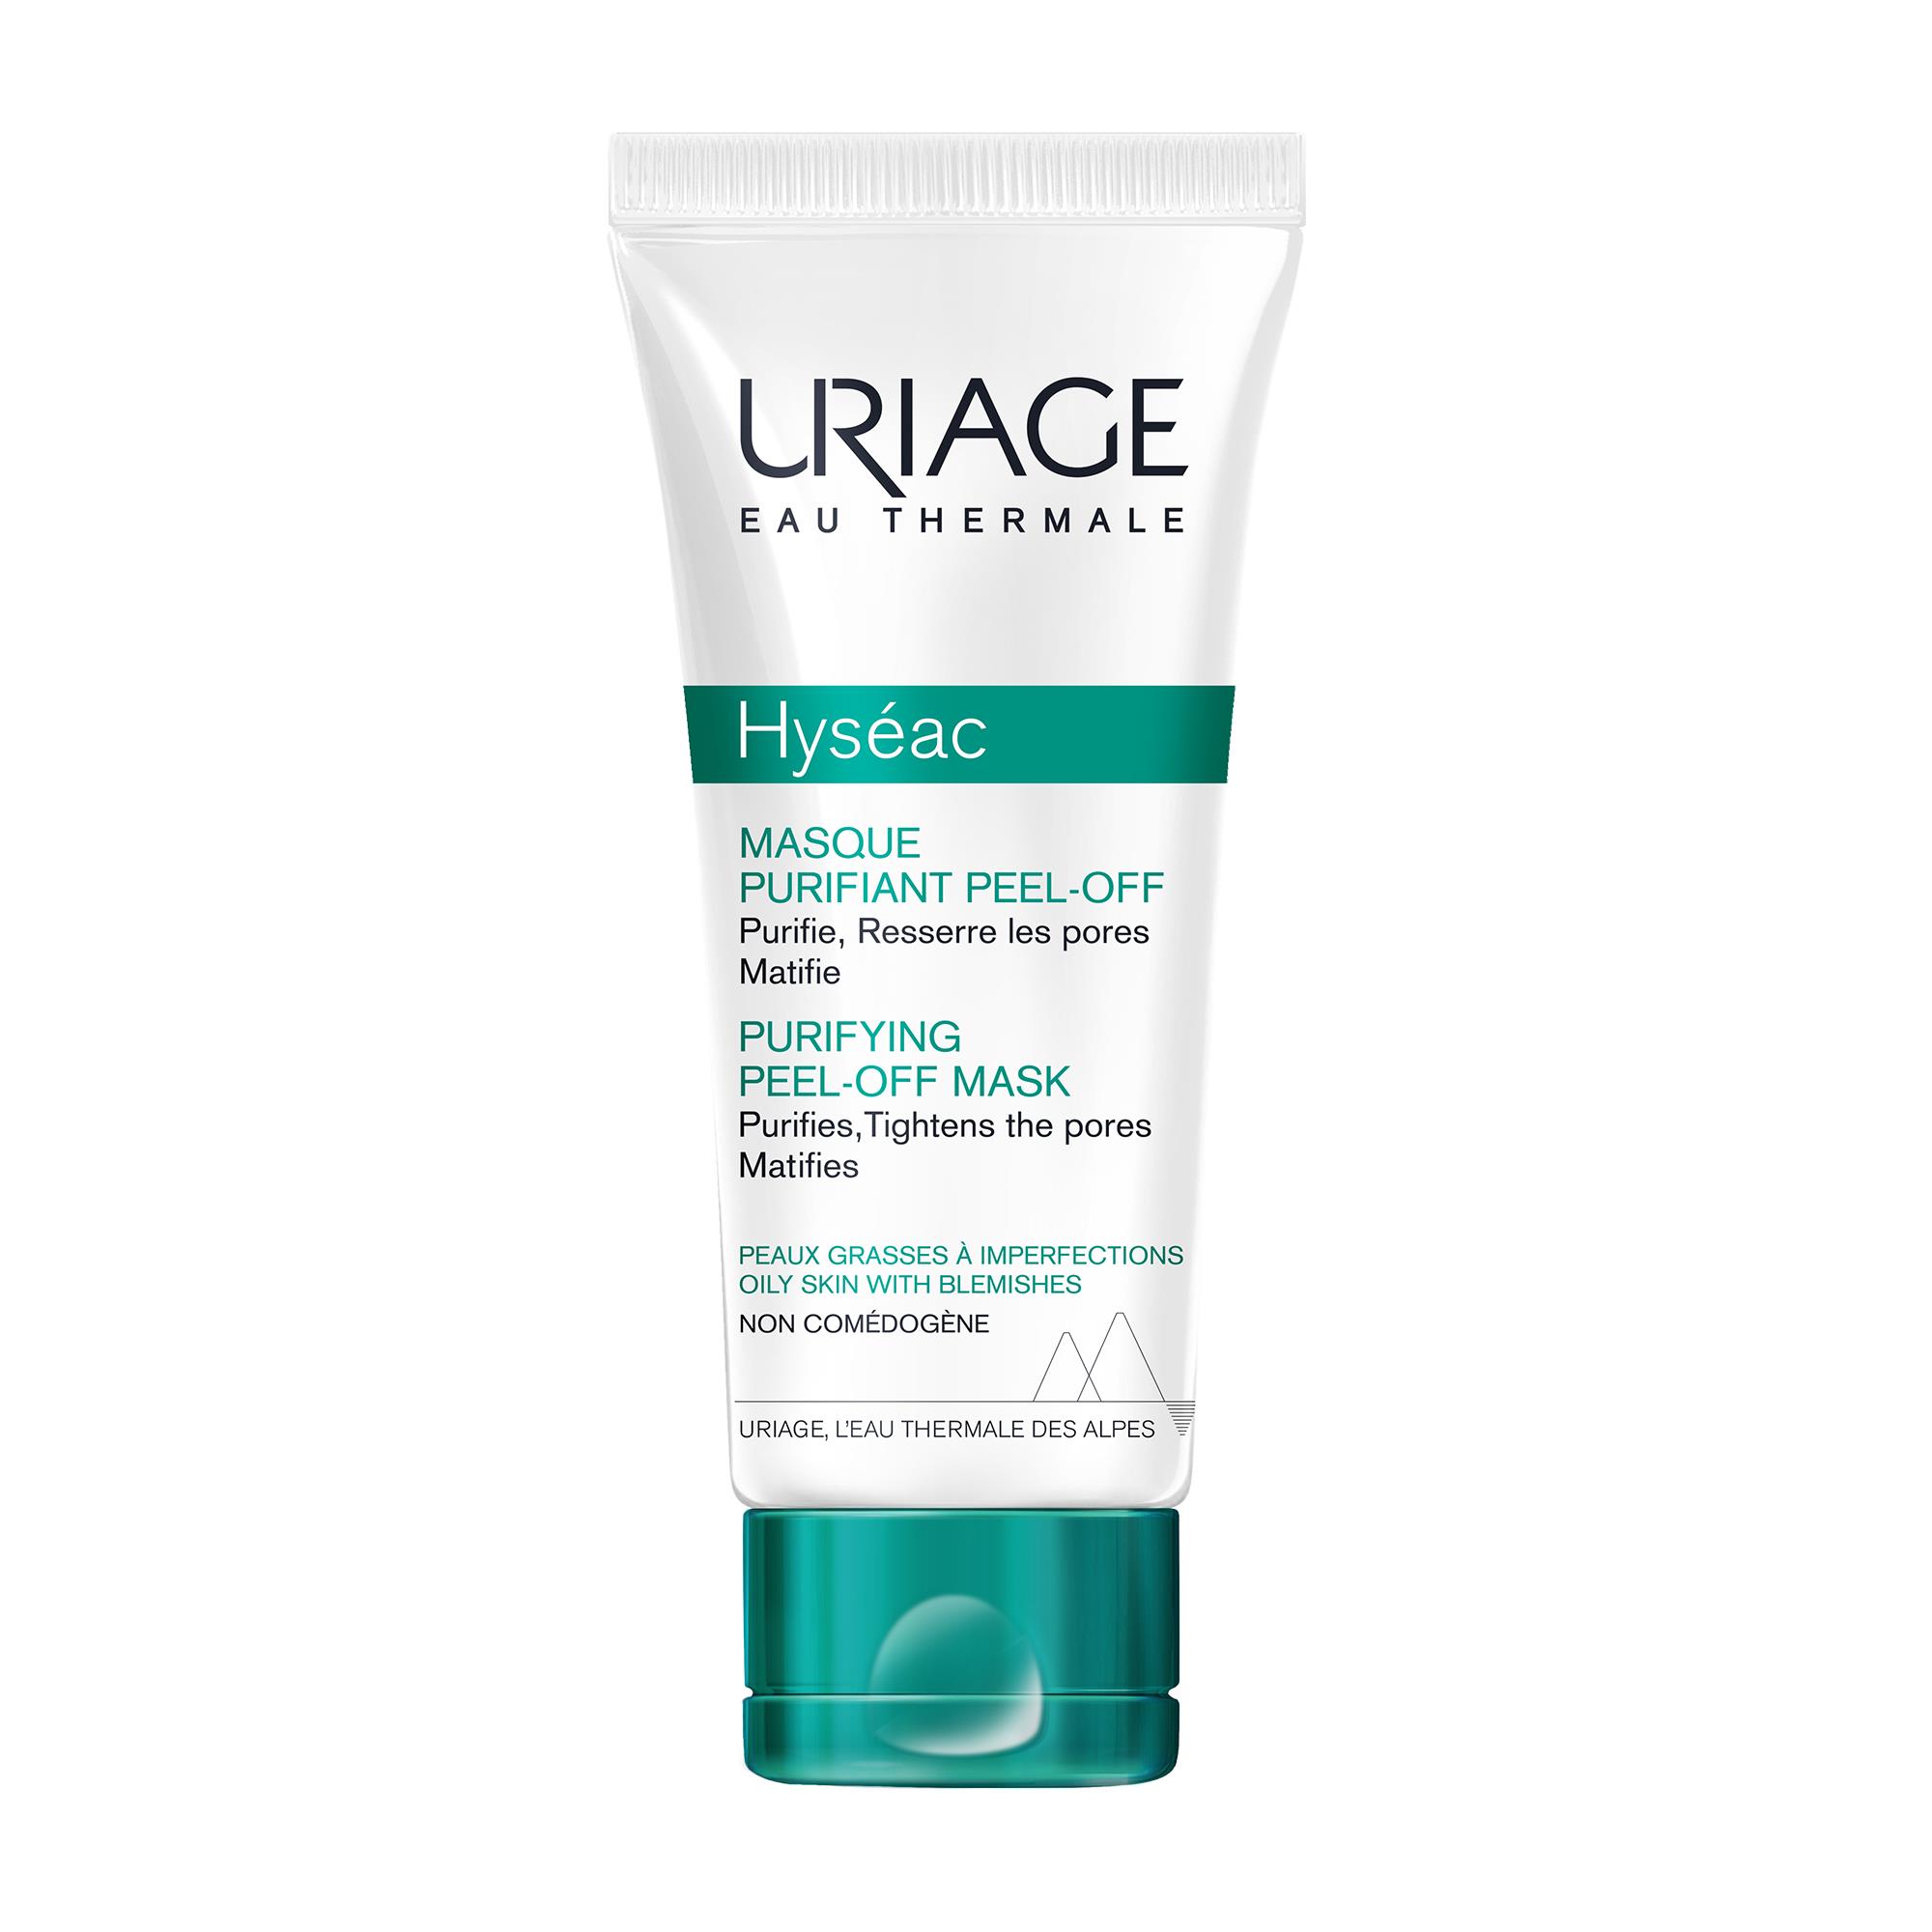 Uriage Hyseac Peel Off Mask 50ml - Face